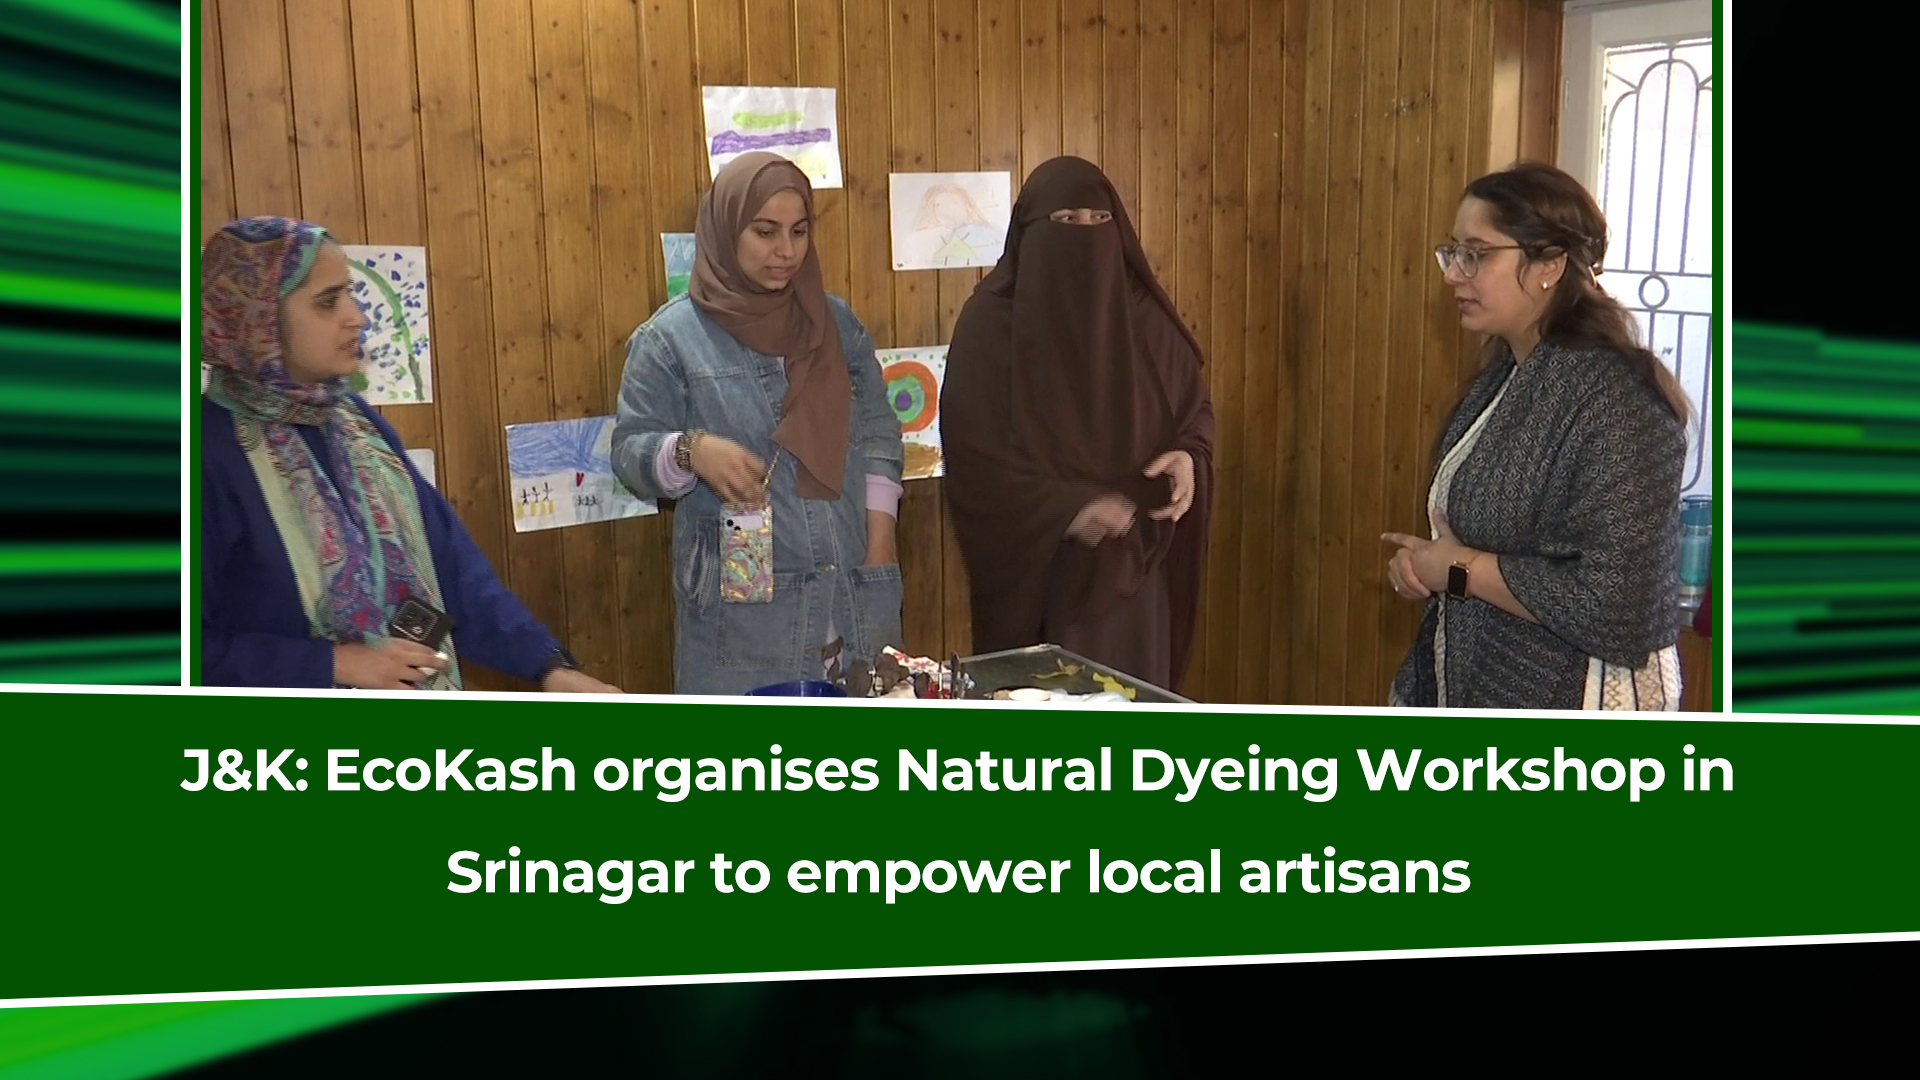 J&K: EcoKash organises Natural Dyeing Workshop in Srinagar to empower local artisans